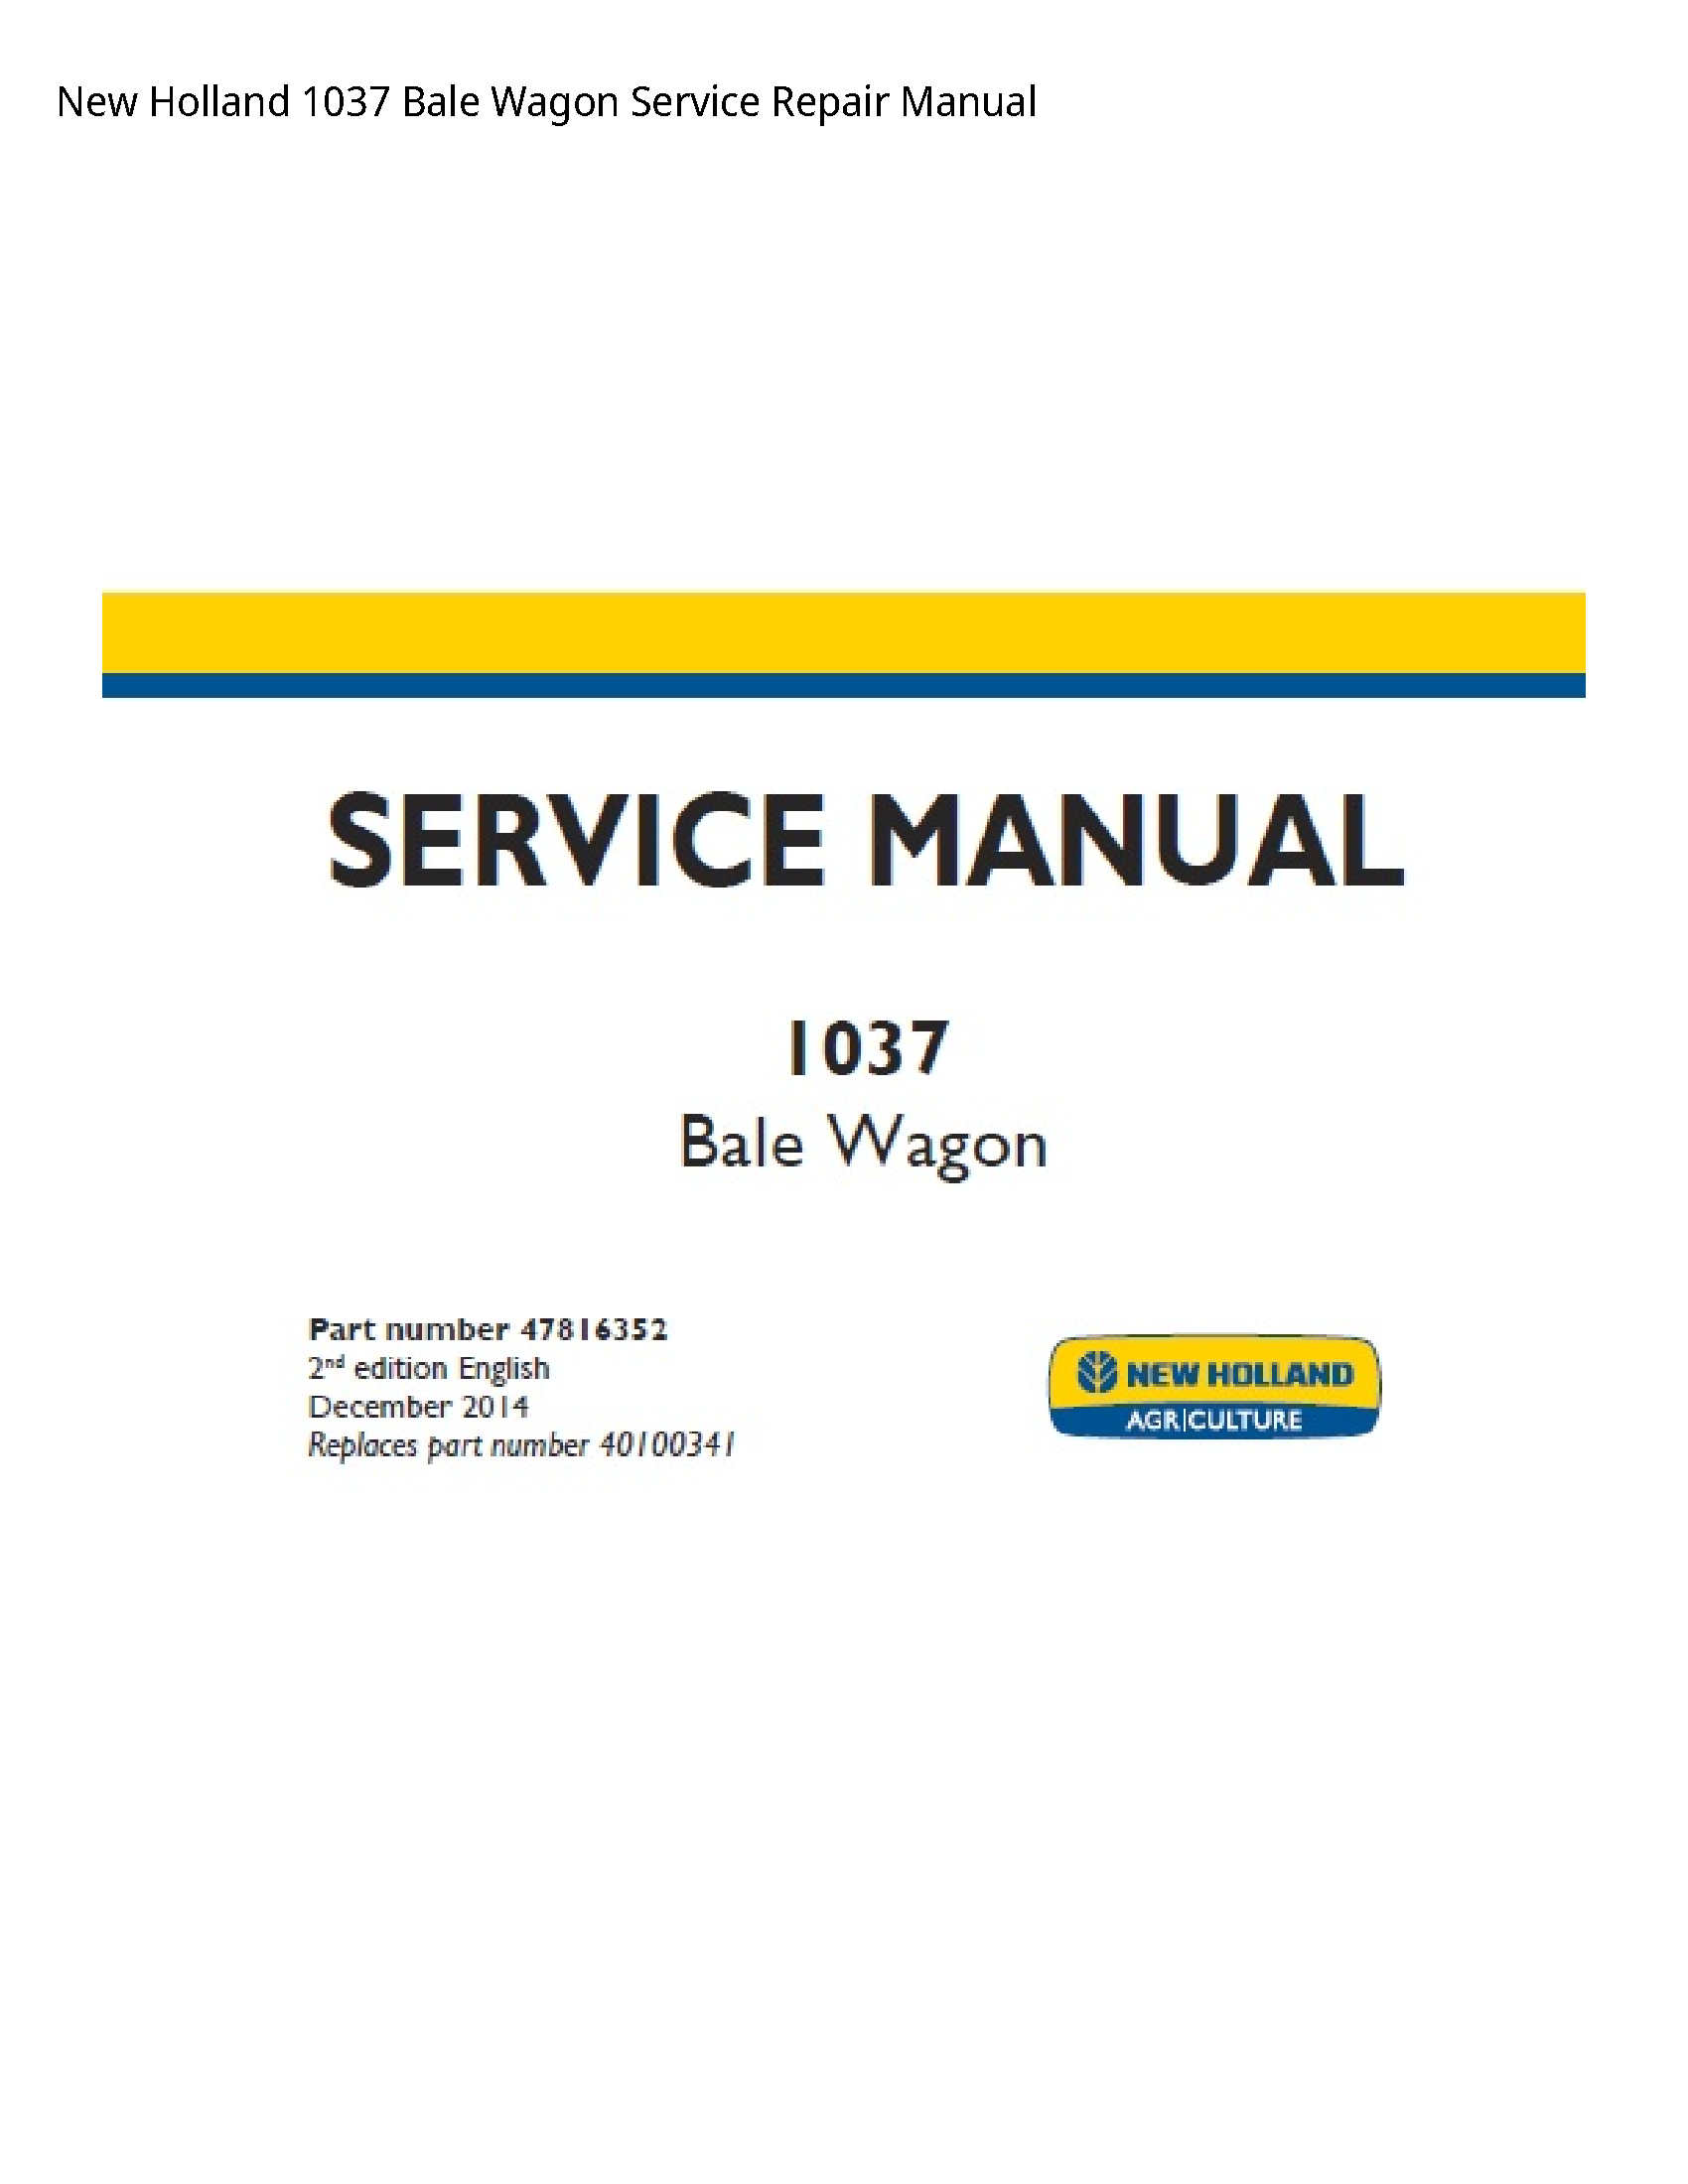 New Holland 1037 Bale Wagon manual